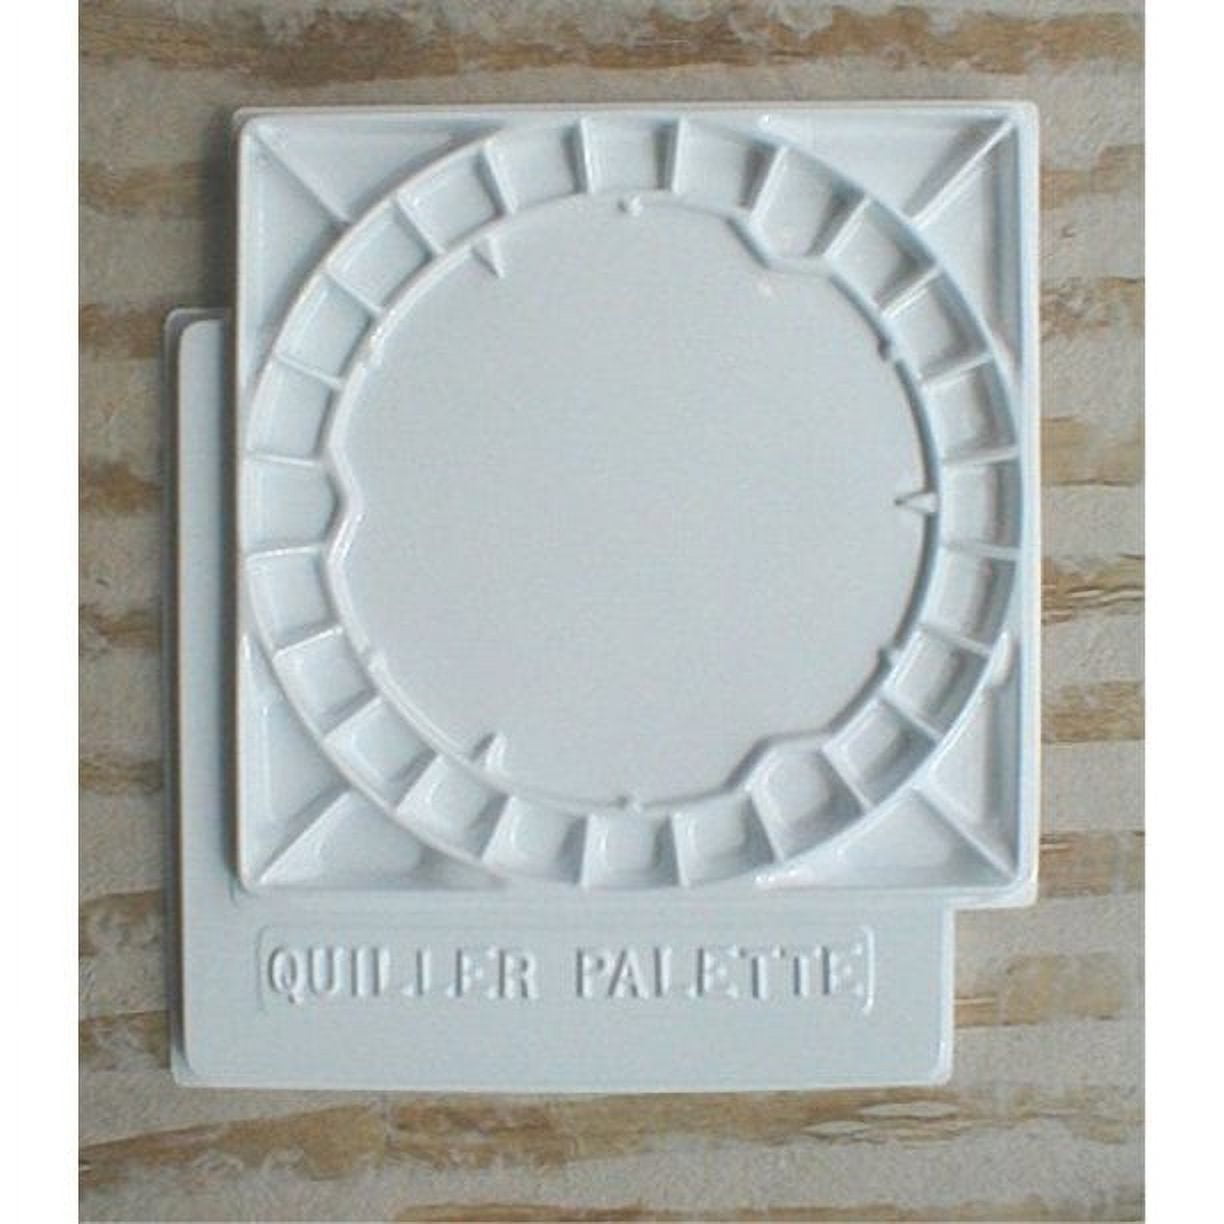 Stephen Quiller Porcelain Palette 13x13 inch